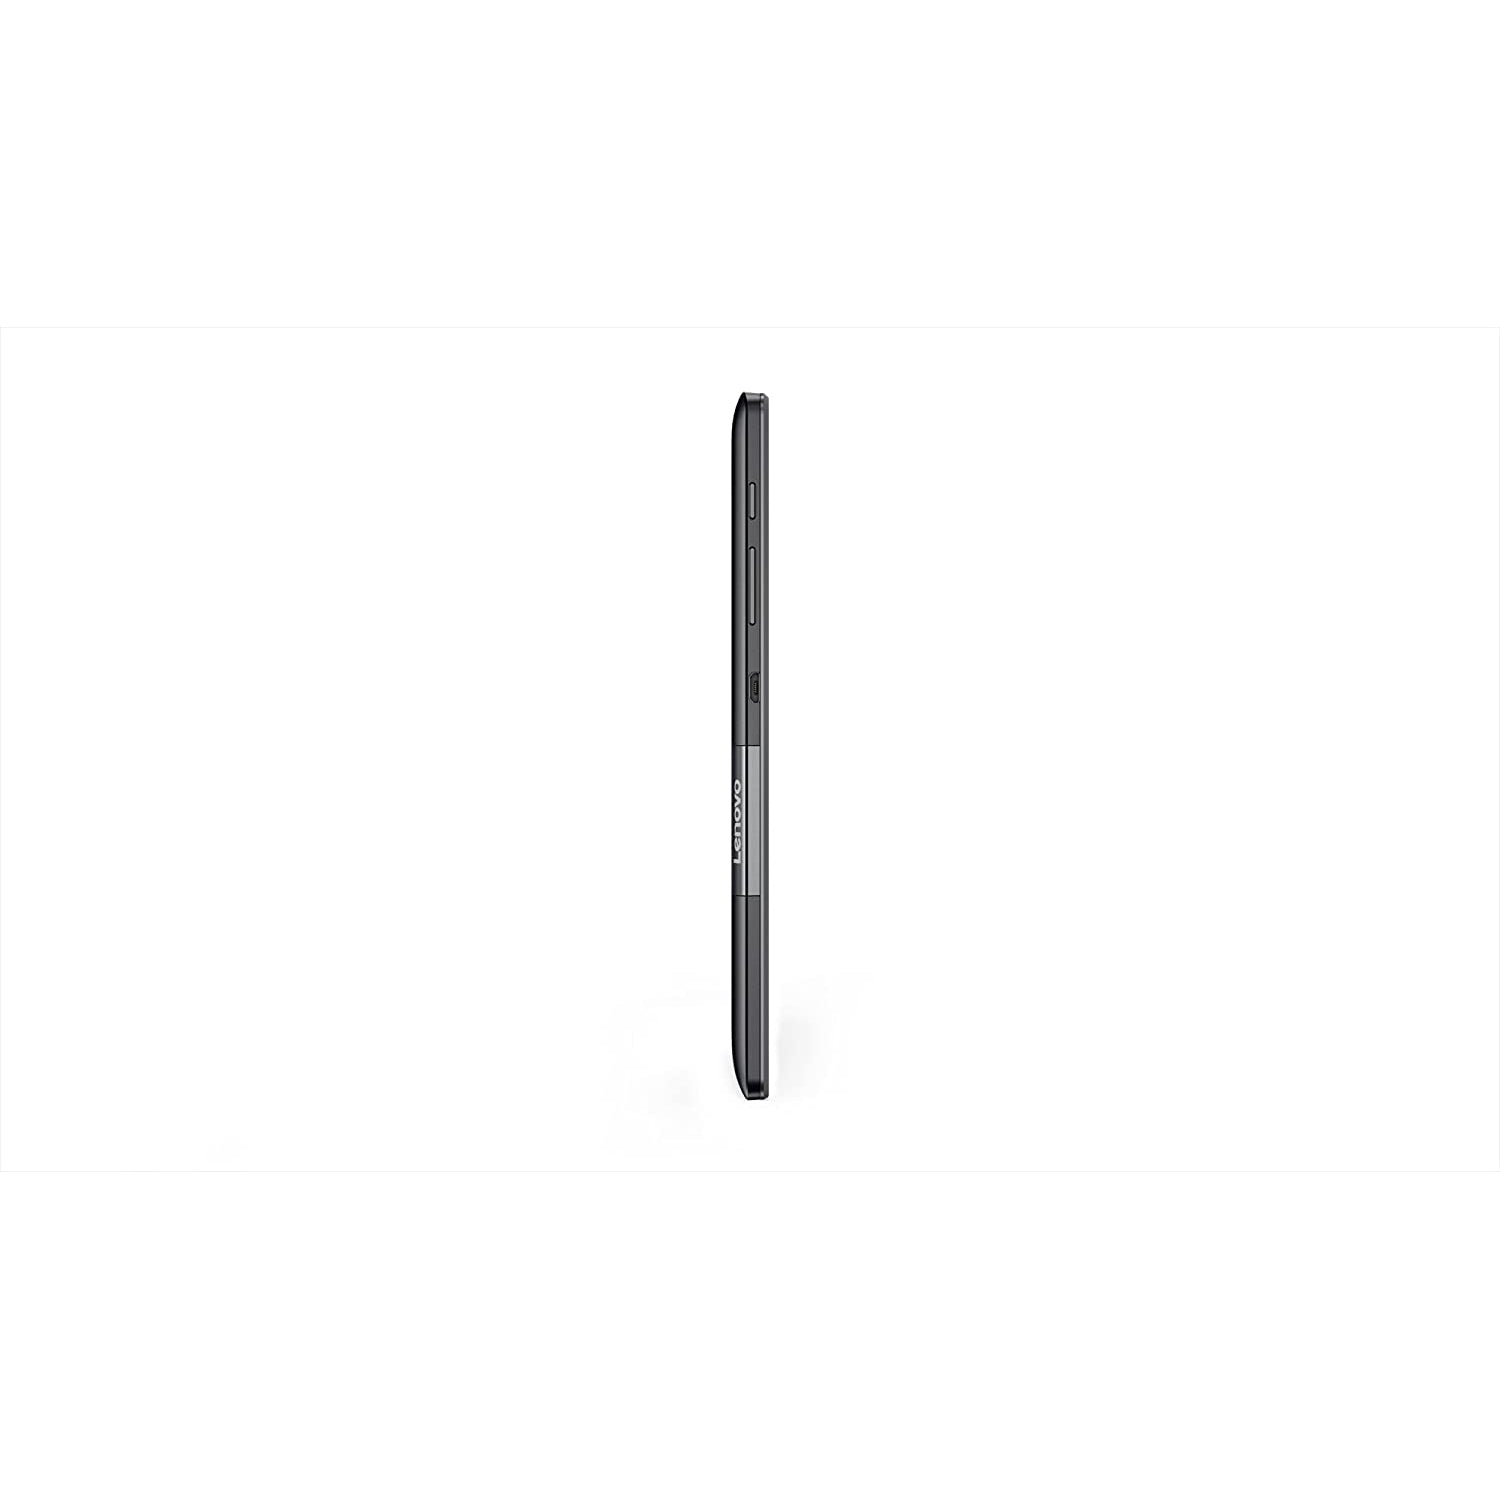 Lenovo Tab 3 10 Plus Tablet, Android, Wi-Fi, 2GB RAM, 16GB, 10.1" Full HD, Slate Black